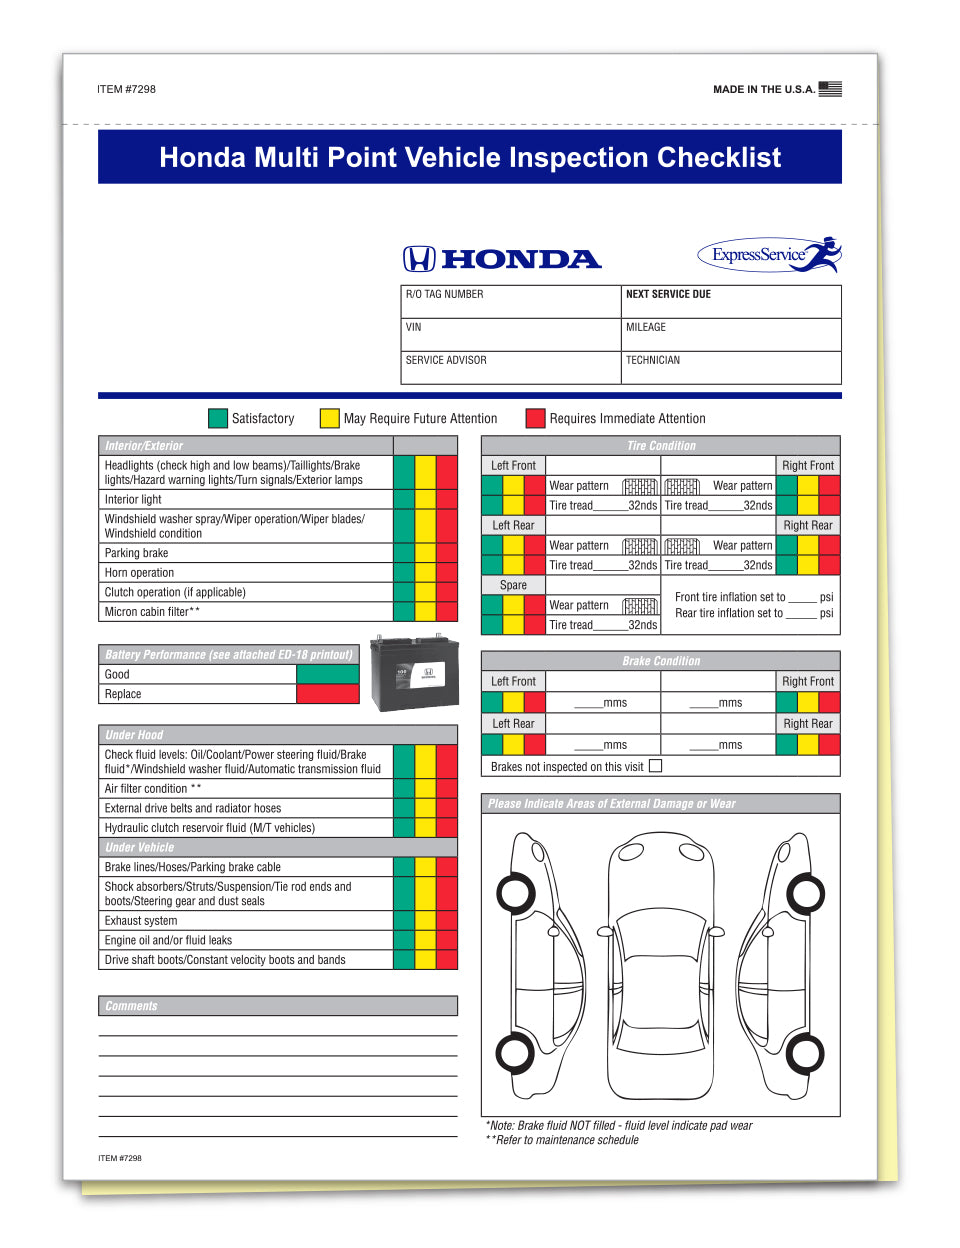 Honda Multi-Point Vehicle Checkup - 2 Part 